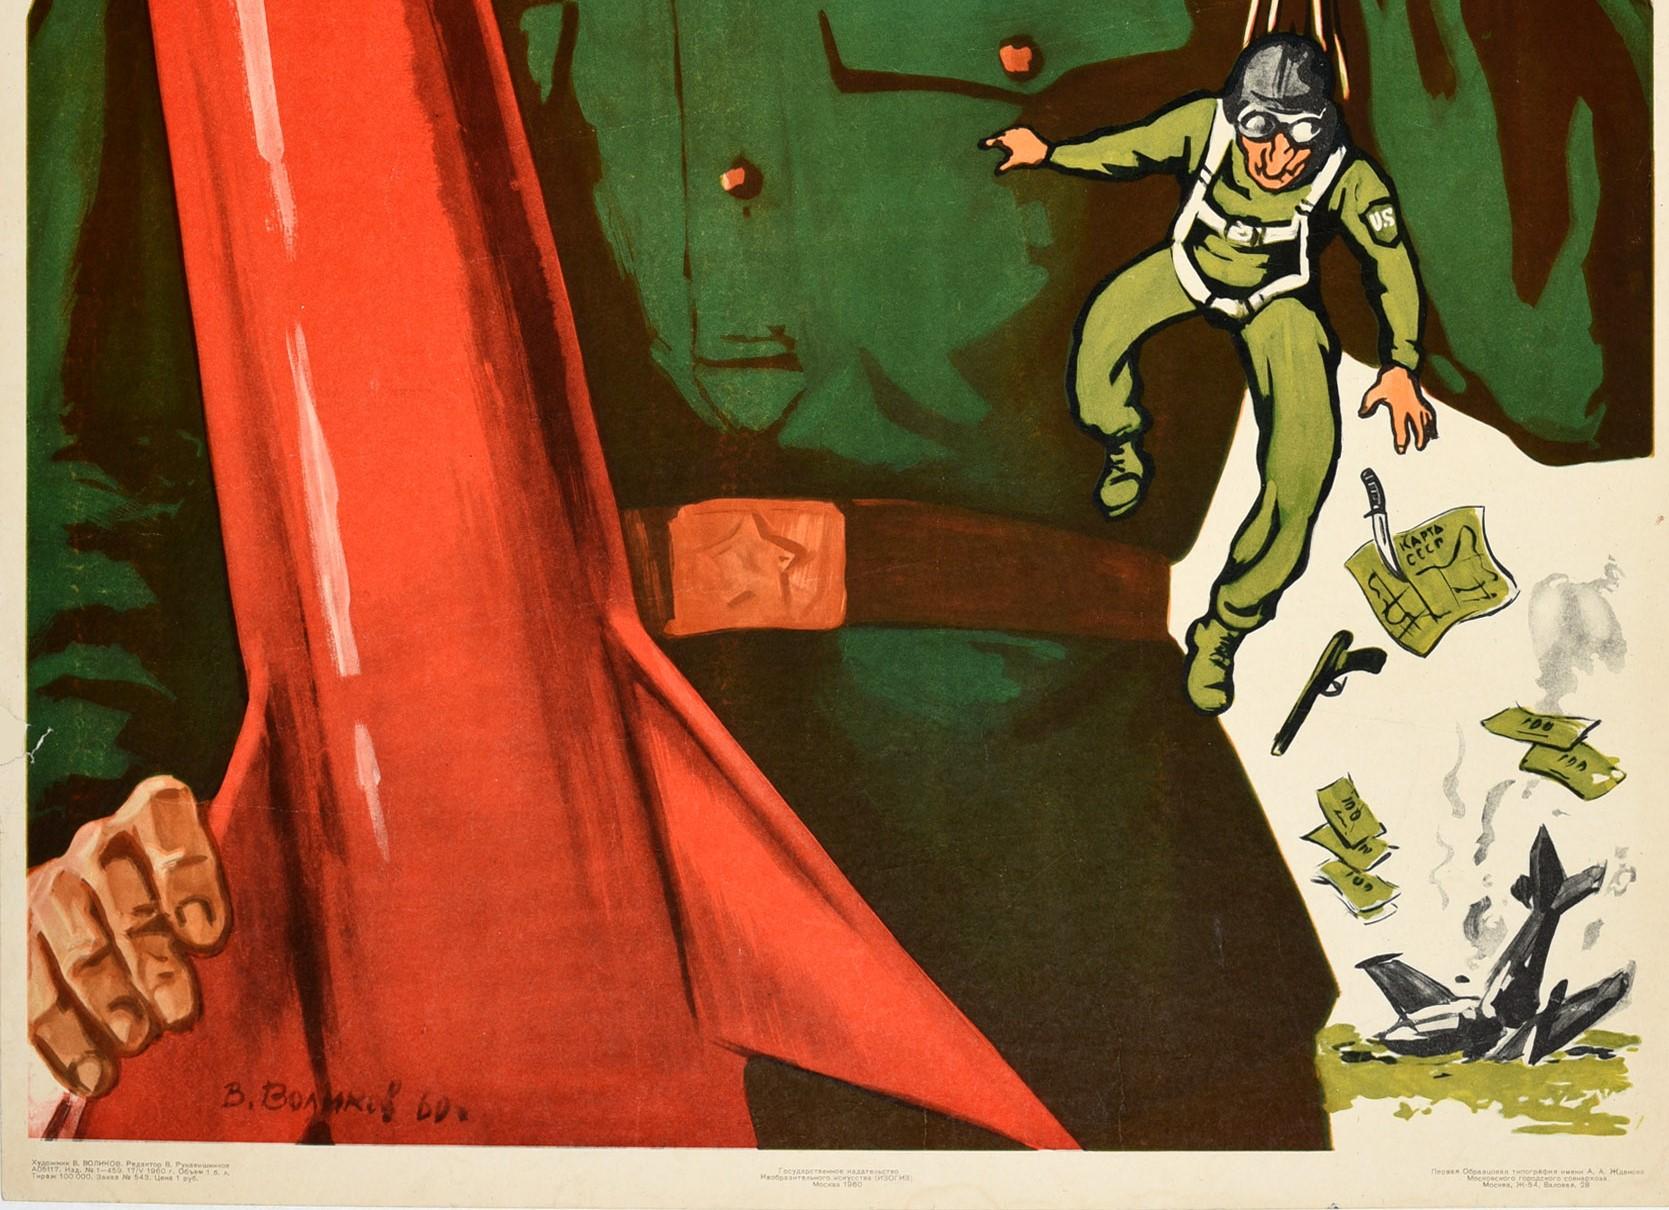 cold war propaganda posters